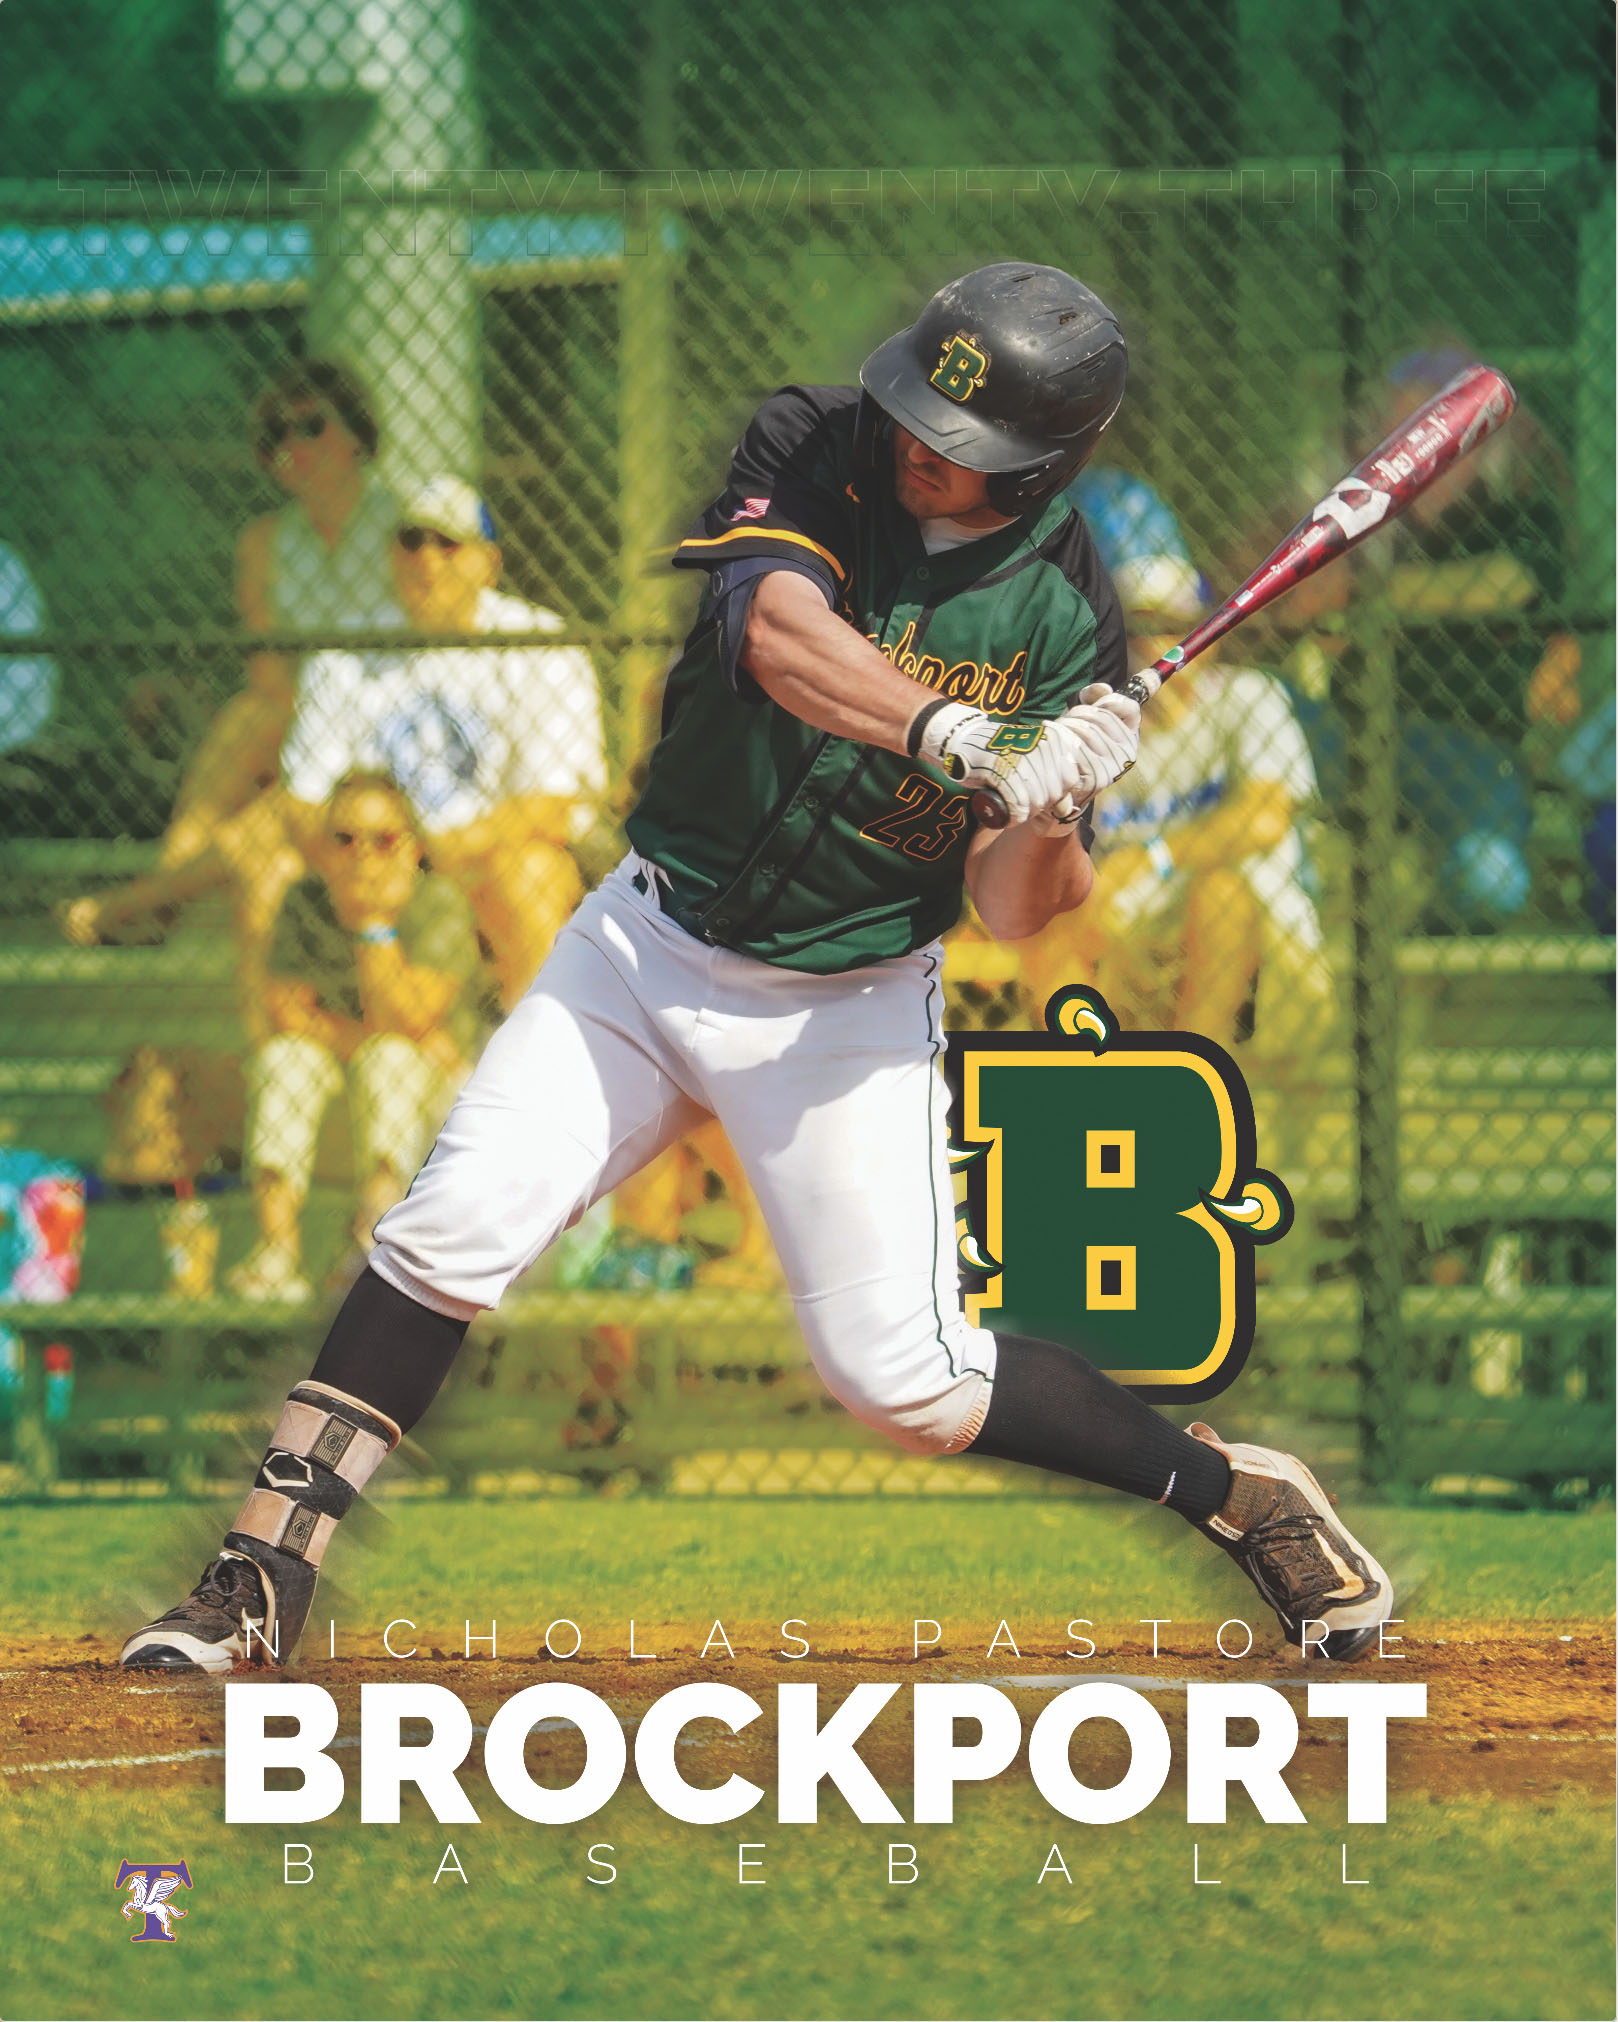 Brockport Baseball Nicholas Pastore Poster